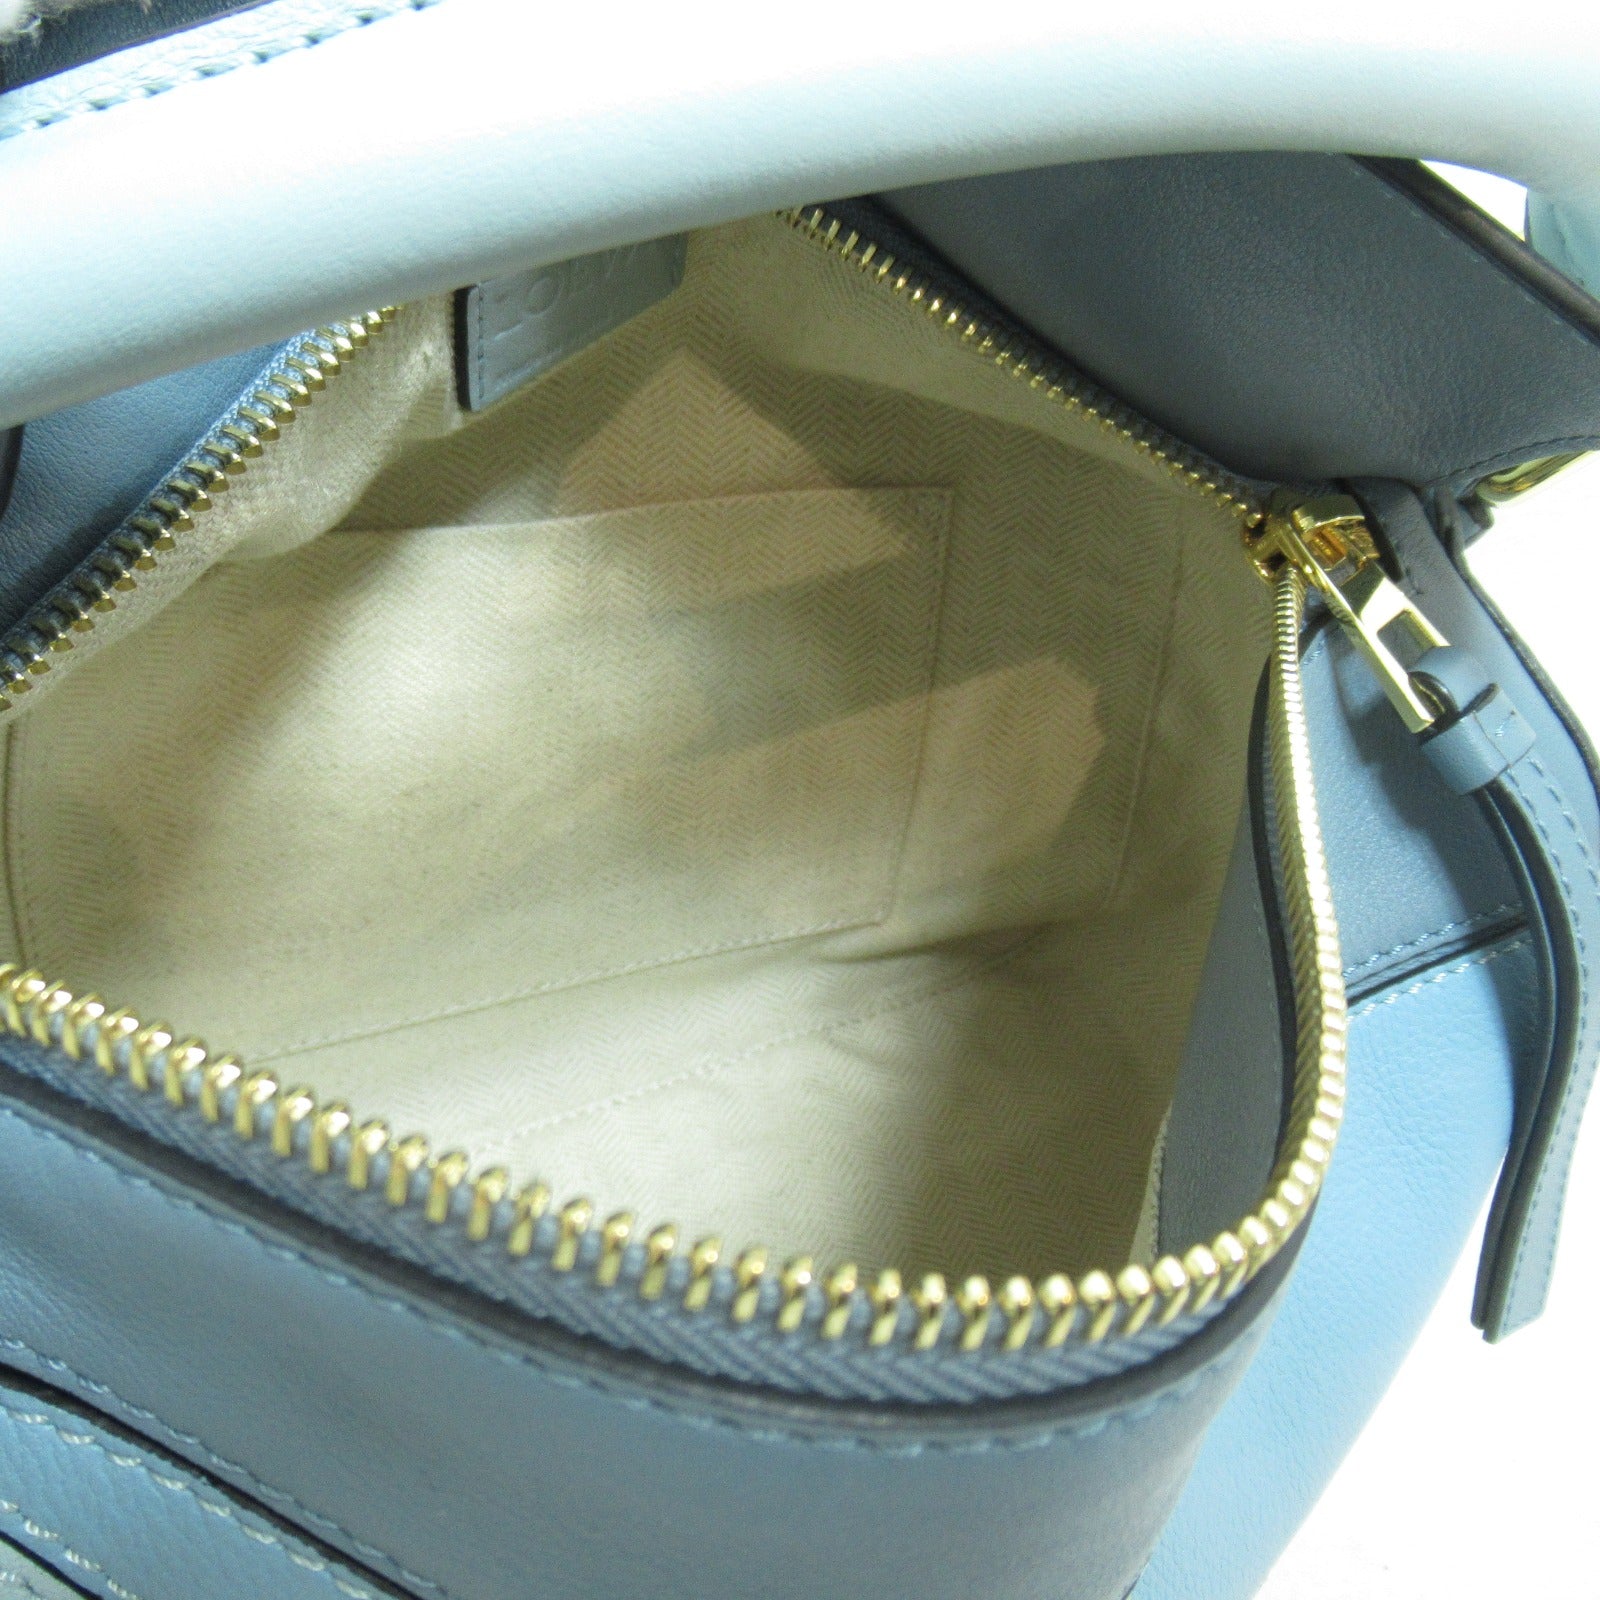 Loewe LOEWE Puzzle Bag Small 2w Shoulder Bag   Blue Collection